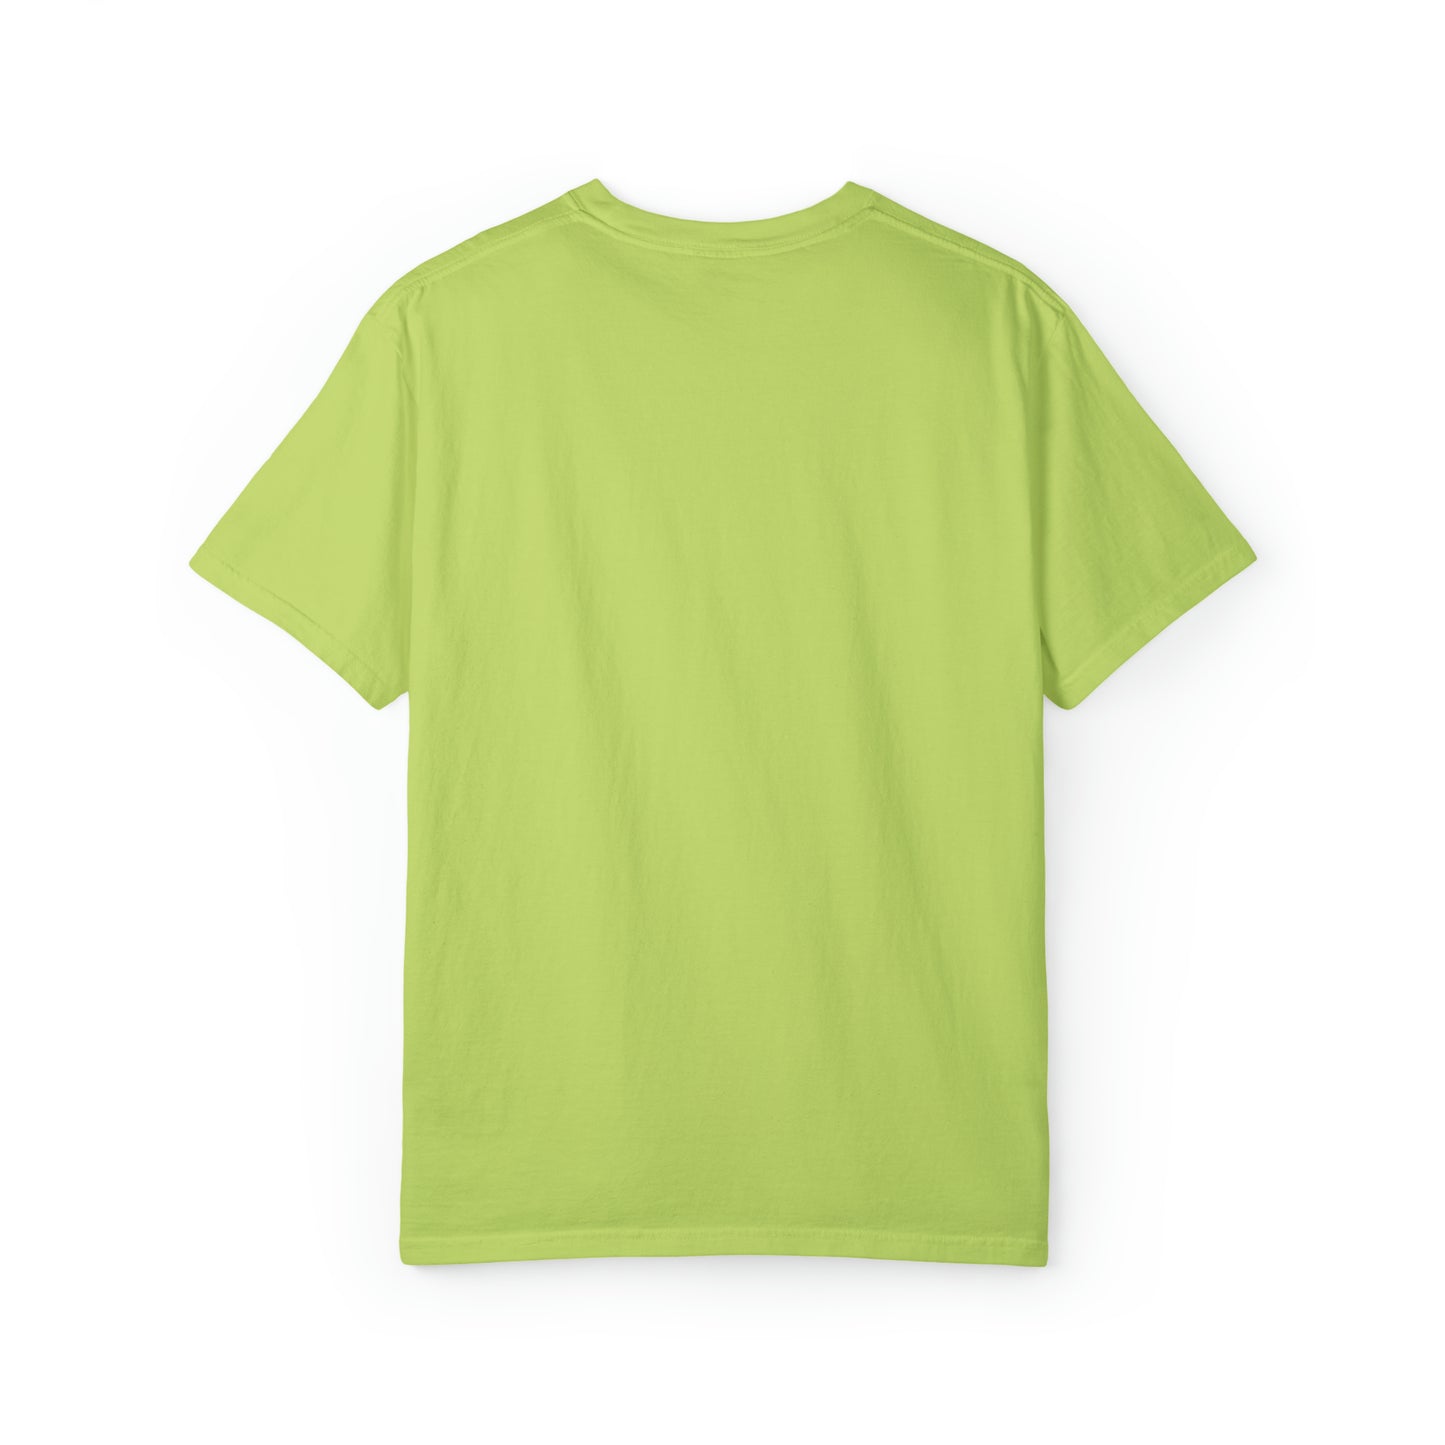 Wu-Tang Clan - C.R.E.A.M - Unisex Comfort Colors T-shirt